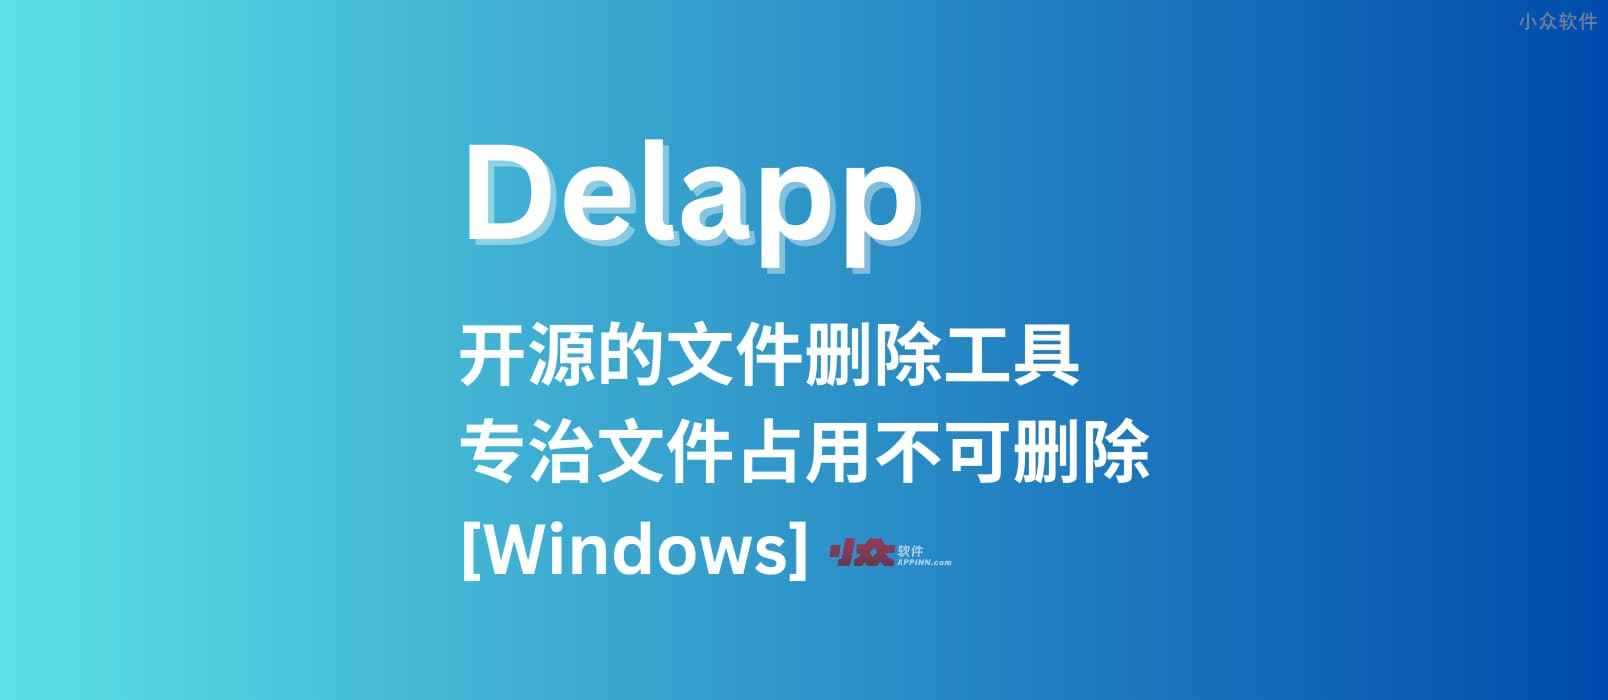 Delapp - 开源的文件删除工具，专治文件占用不可删除[Windows]开发者「瞎扯八道」写的好